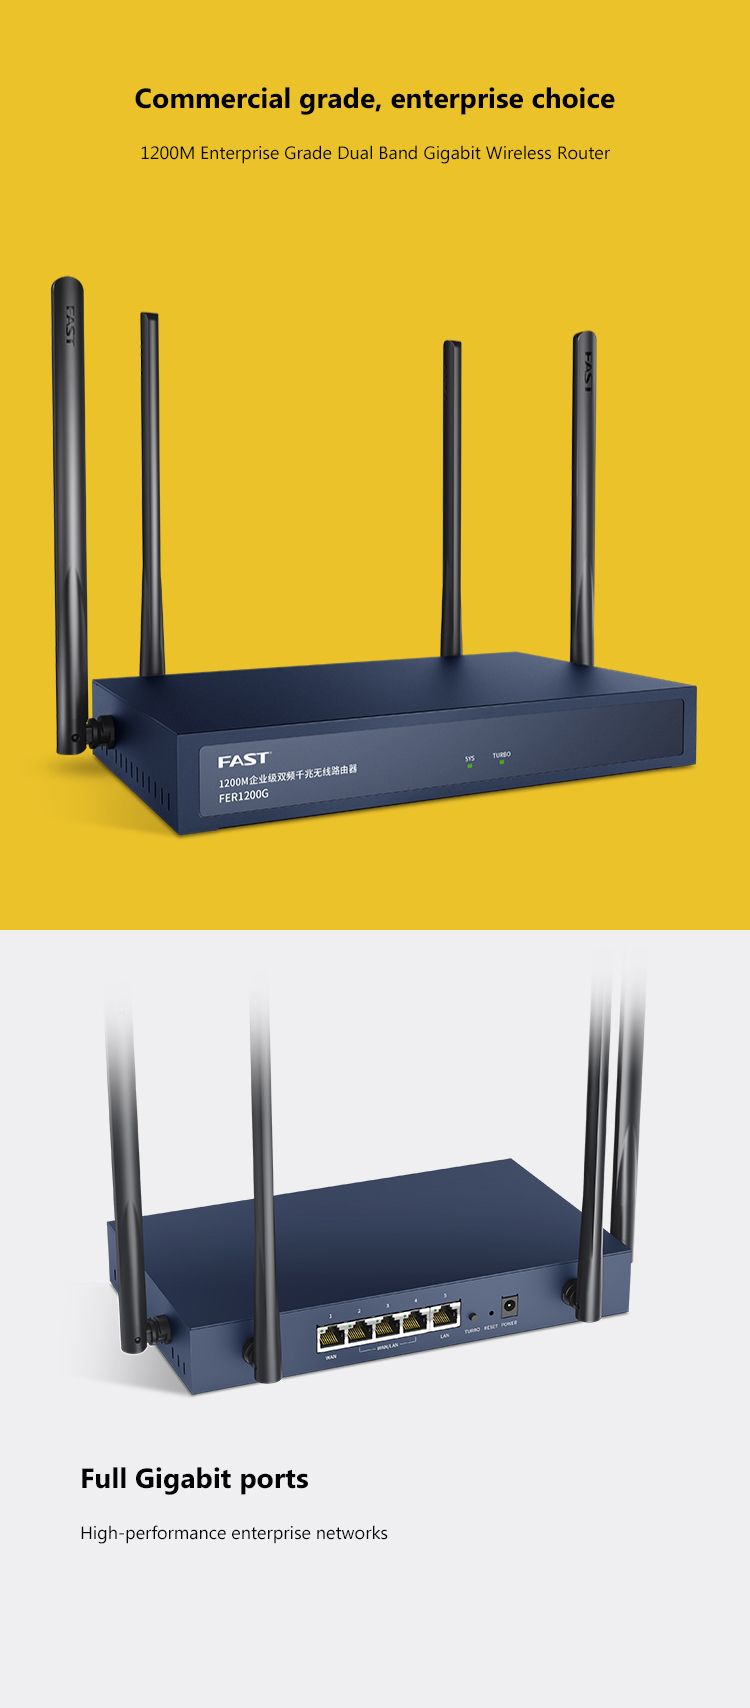 Fast-1200M-Dual-Band-Gigabit-Wireless-Router-Commercial-Grade-Enterprise-Office-WiFi-Hotspot-Router--1659112